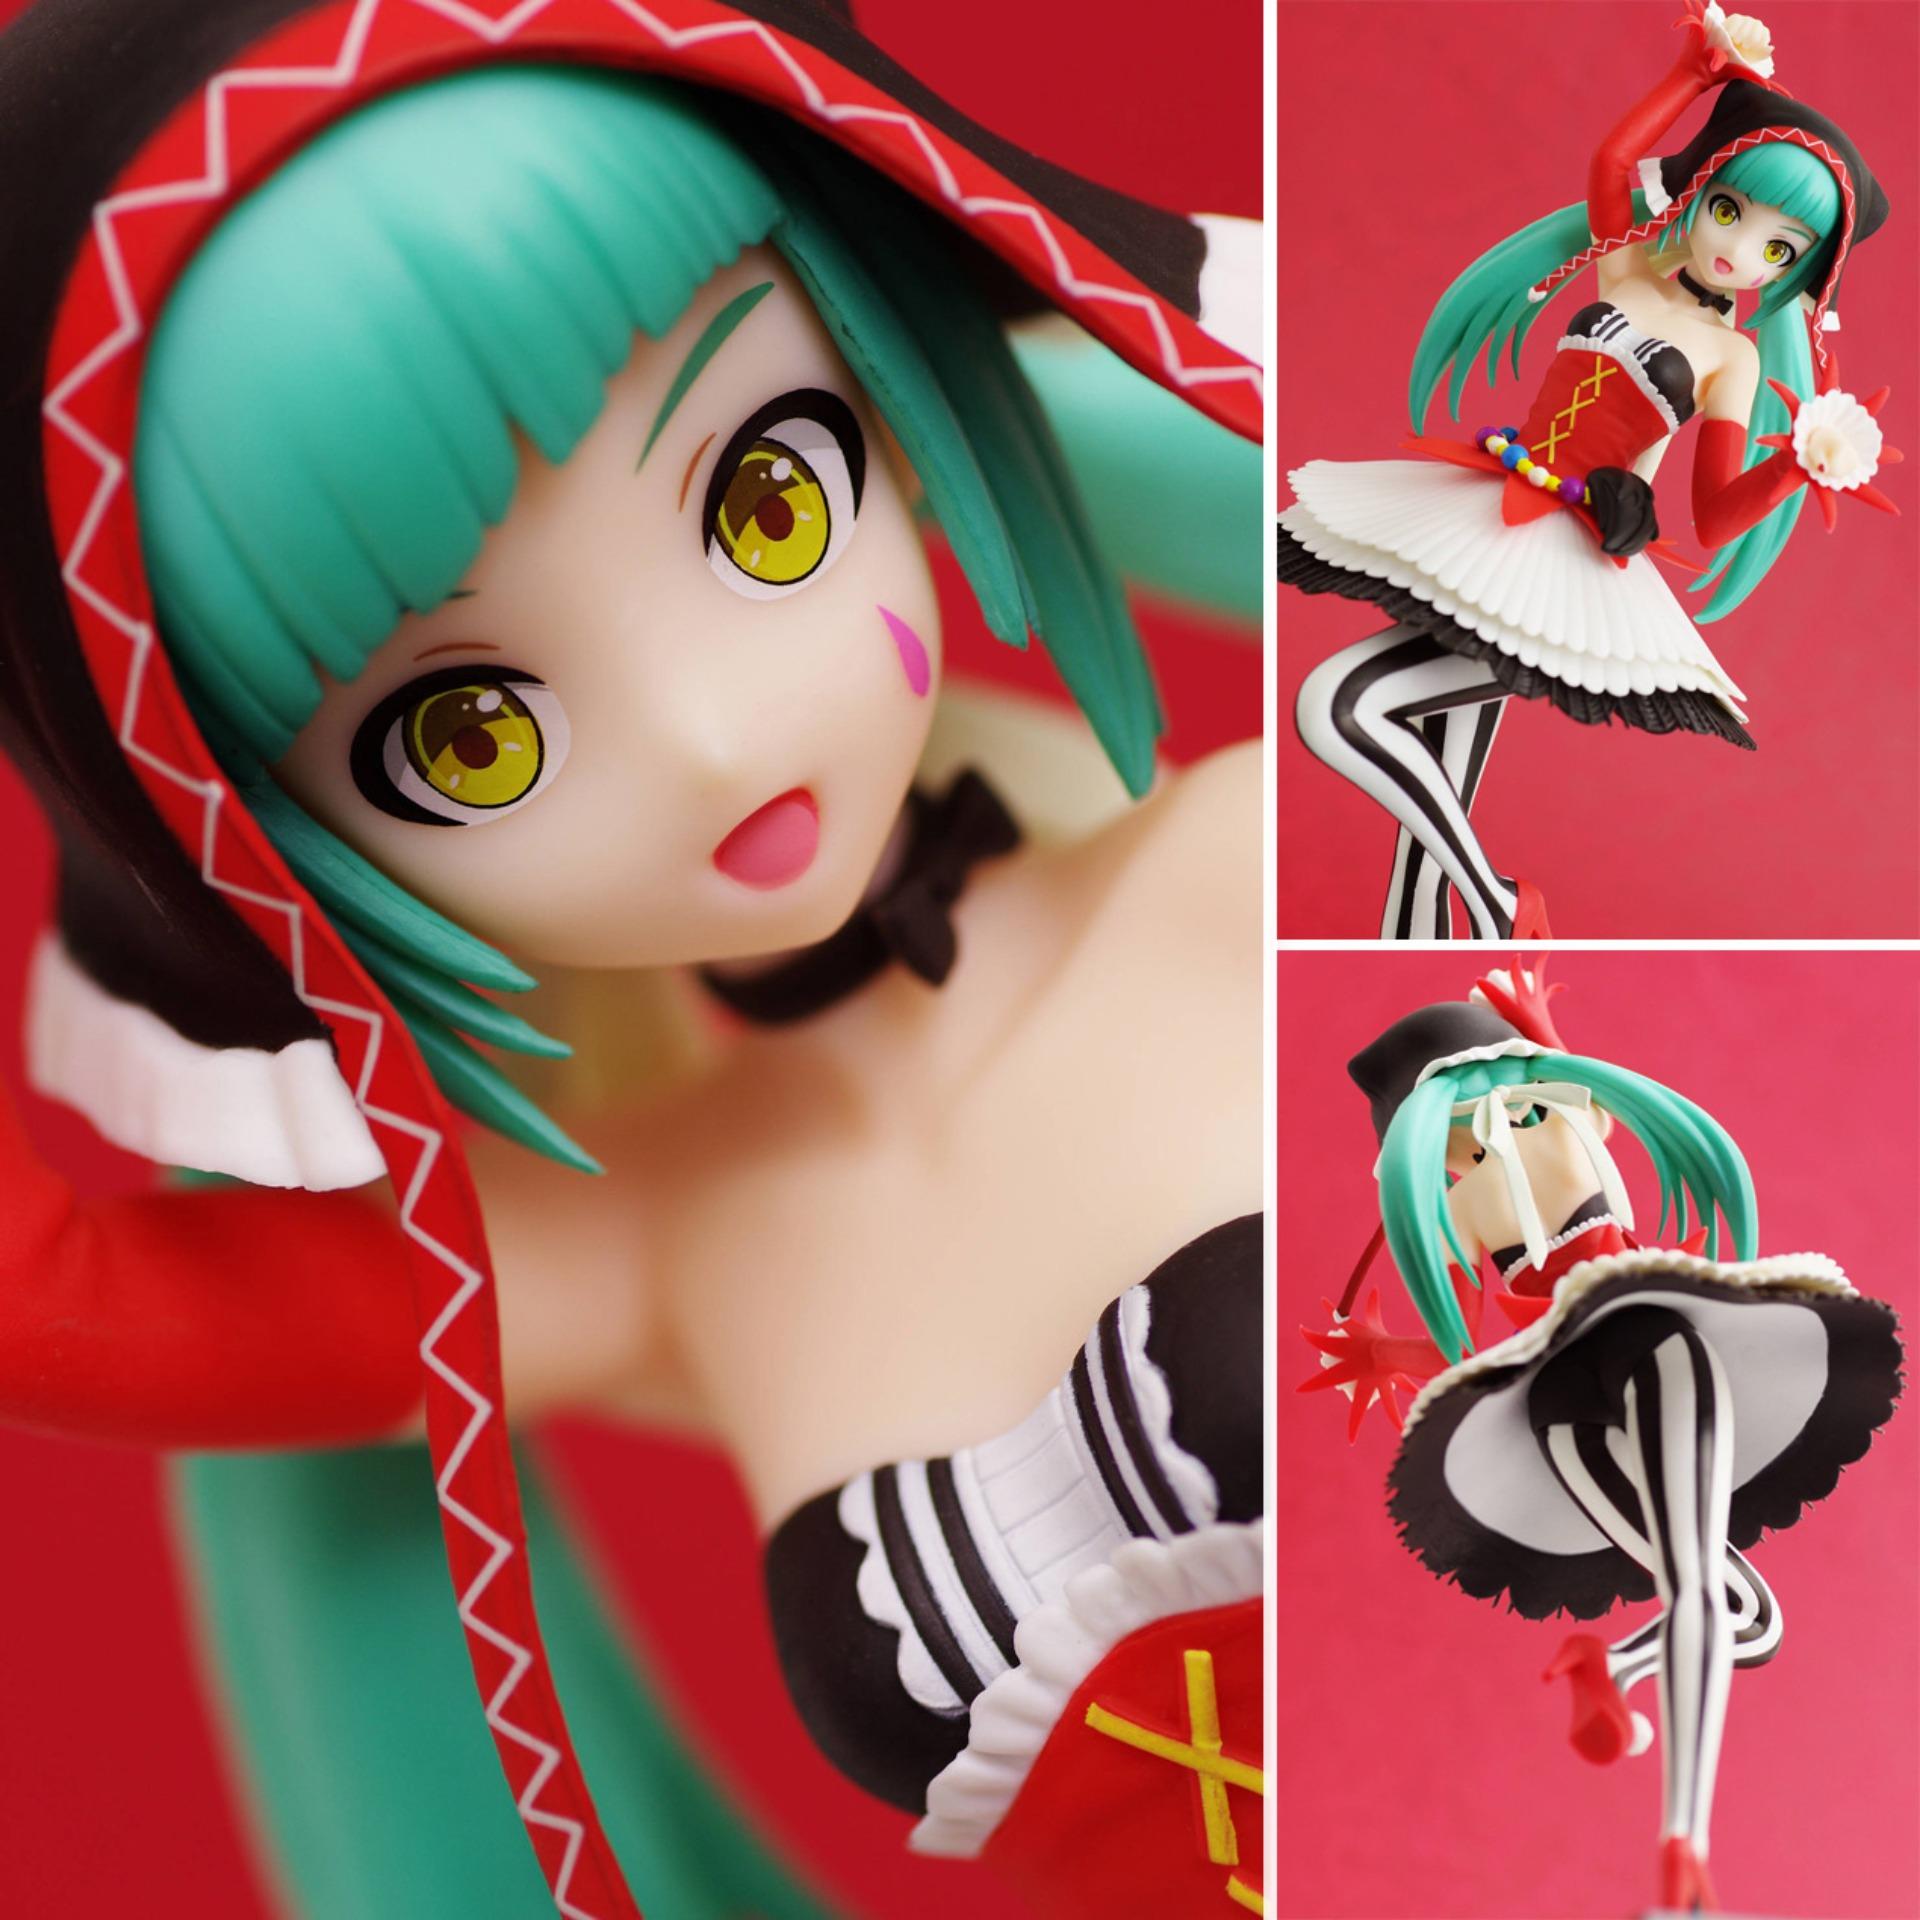 Model โมเดล งานแท้ 100% Sega Vocaloid โวคาลอยด์ จากเรื่อง Project DIVA โปรเจกต์ดีวา Hatsune Miku ฮะสึเนะ มิกุ Cat Food Ver Figure ฟิกเกอร์ Anime ของขวัญ Gift ของสะสมหายาก อนิเมะ การ์ตูน มังงะ Doll ตุ๊กตา คอลเลกชัน สั่งและนำเข้าจากญี่ปุ่น manga